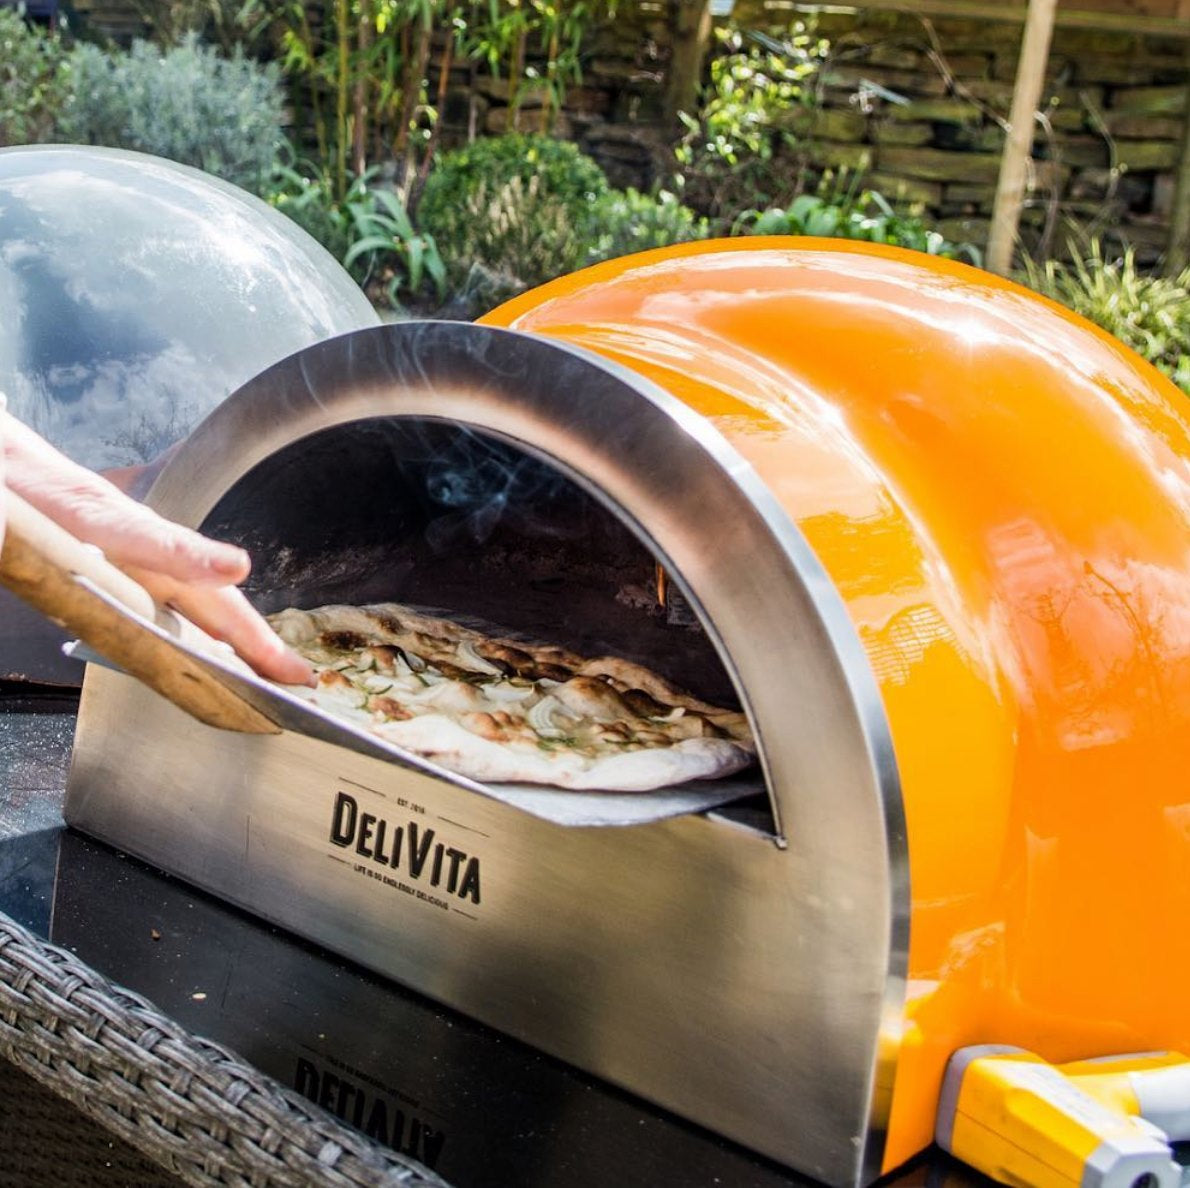 DeliVita The Orange Blaze Oven - Wood Fired Pizza Oven